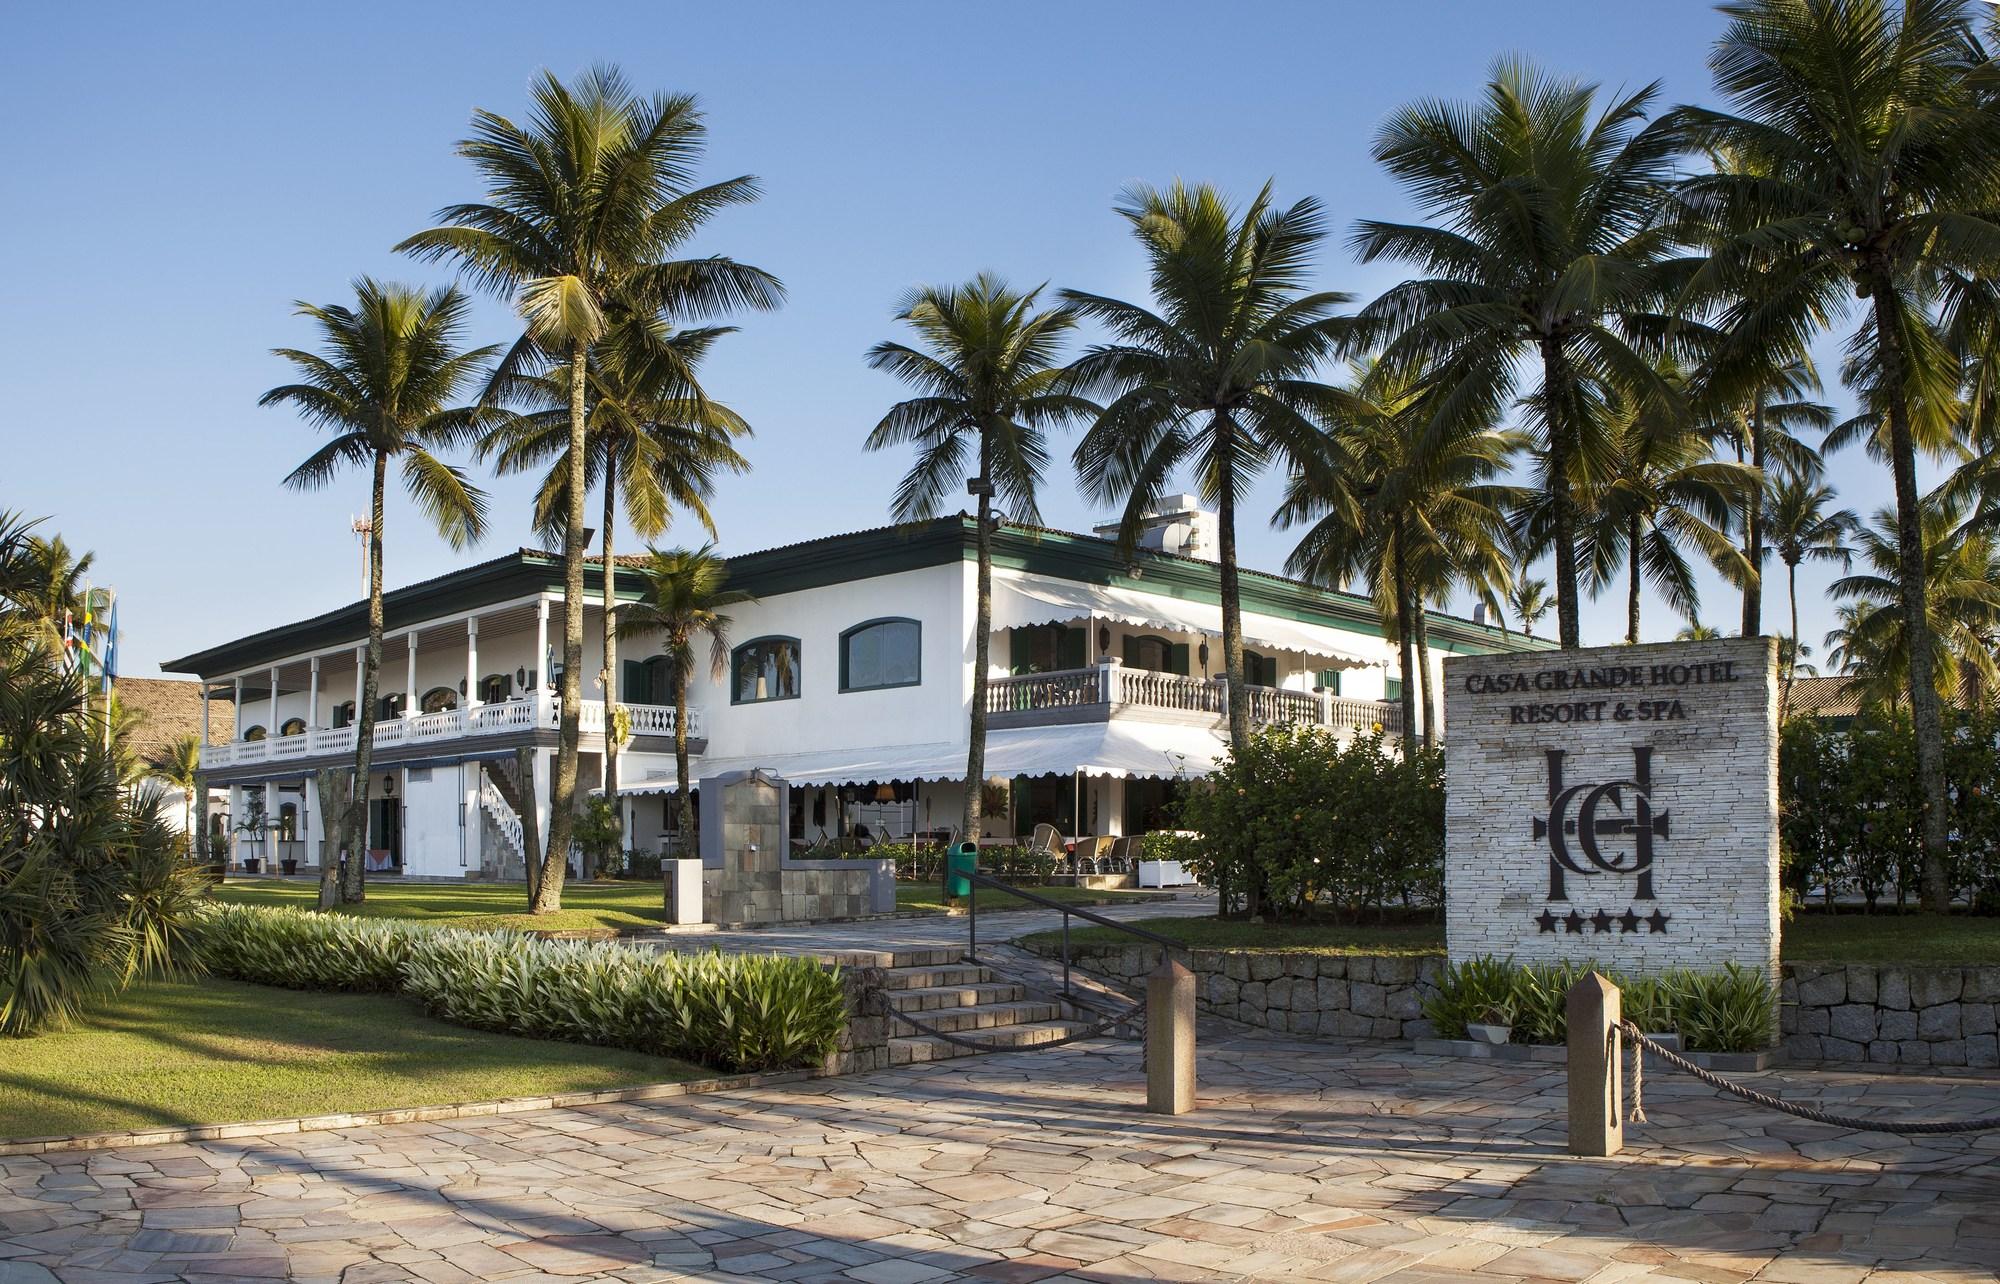 Vista da fachada Casa Grande Hotel Resort & Spa Guarujá